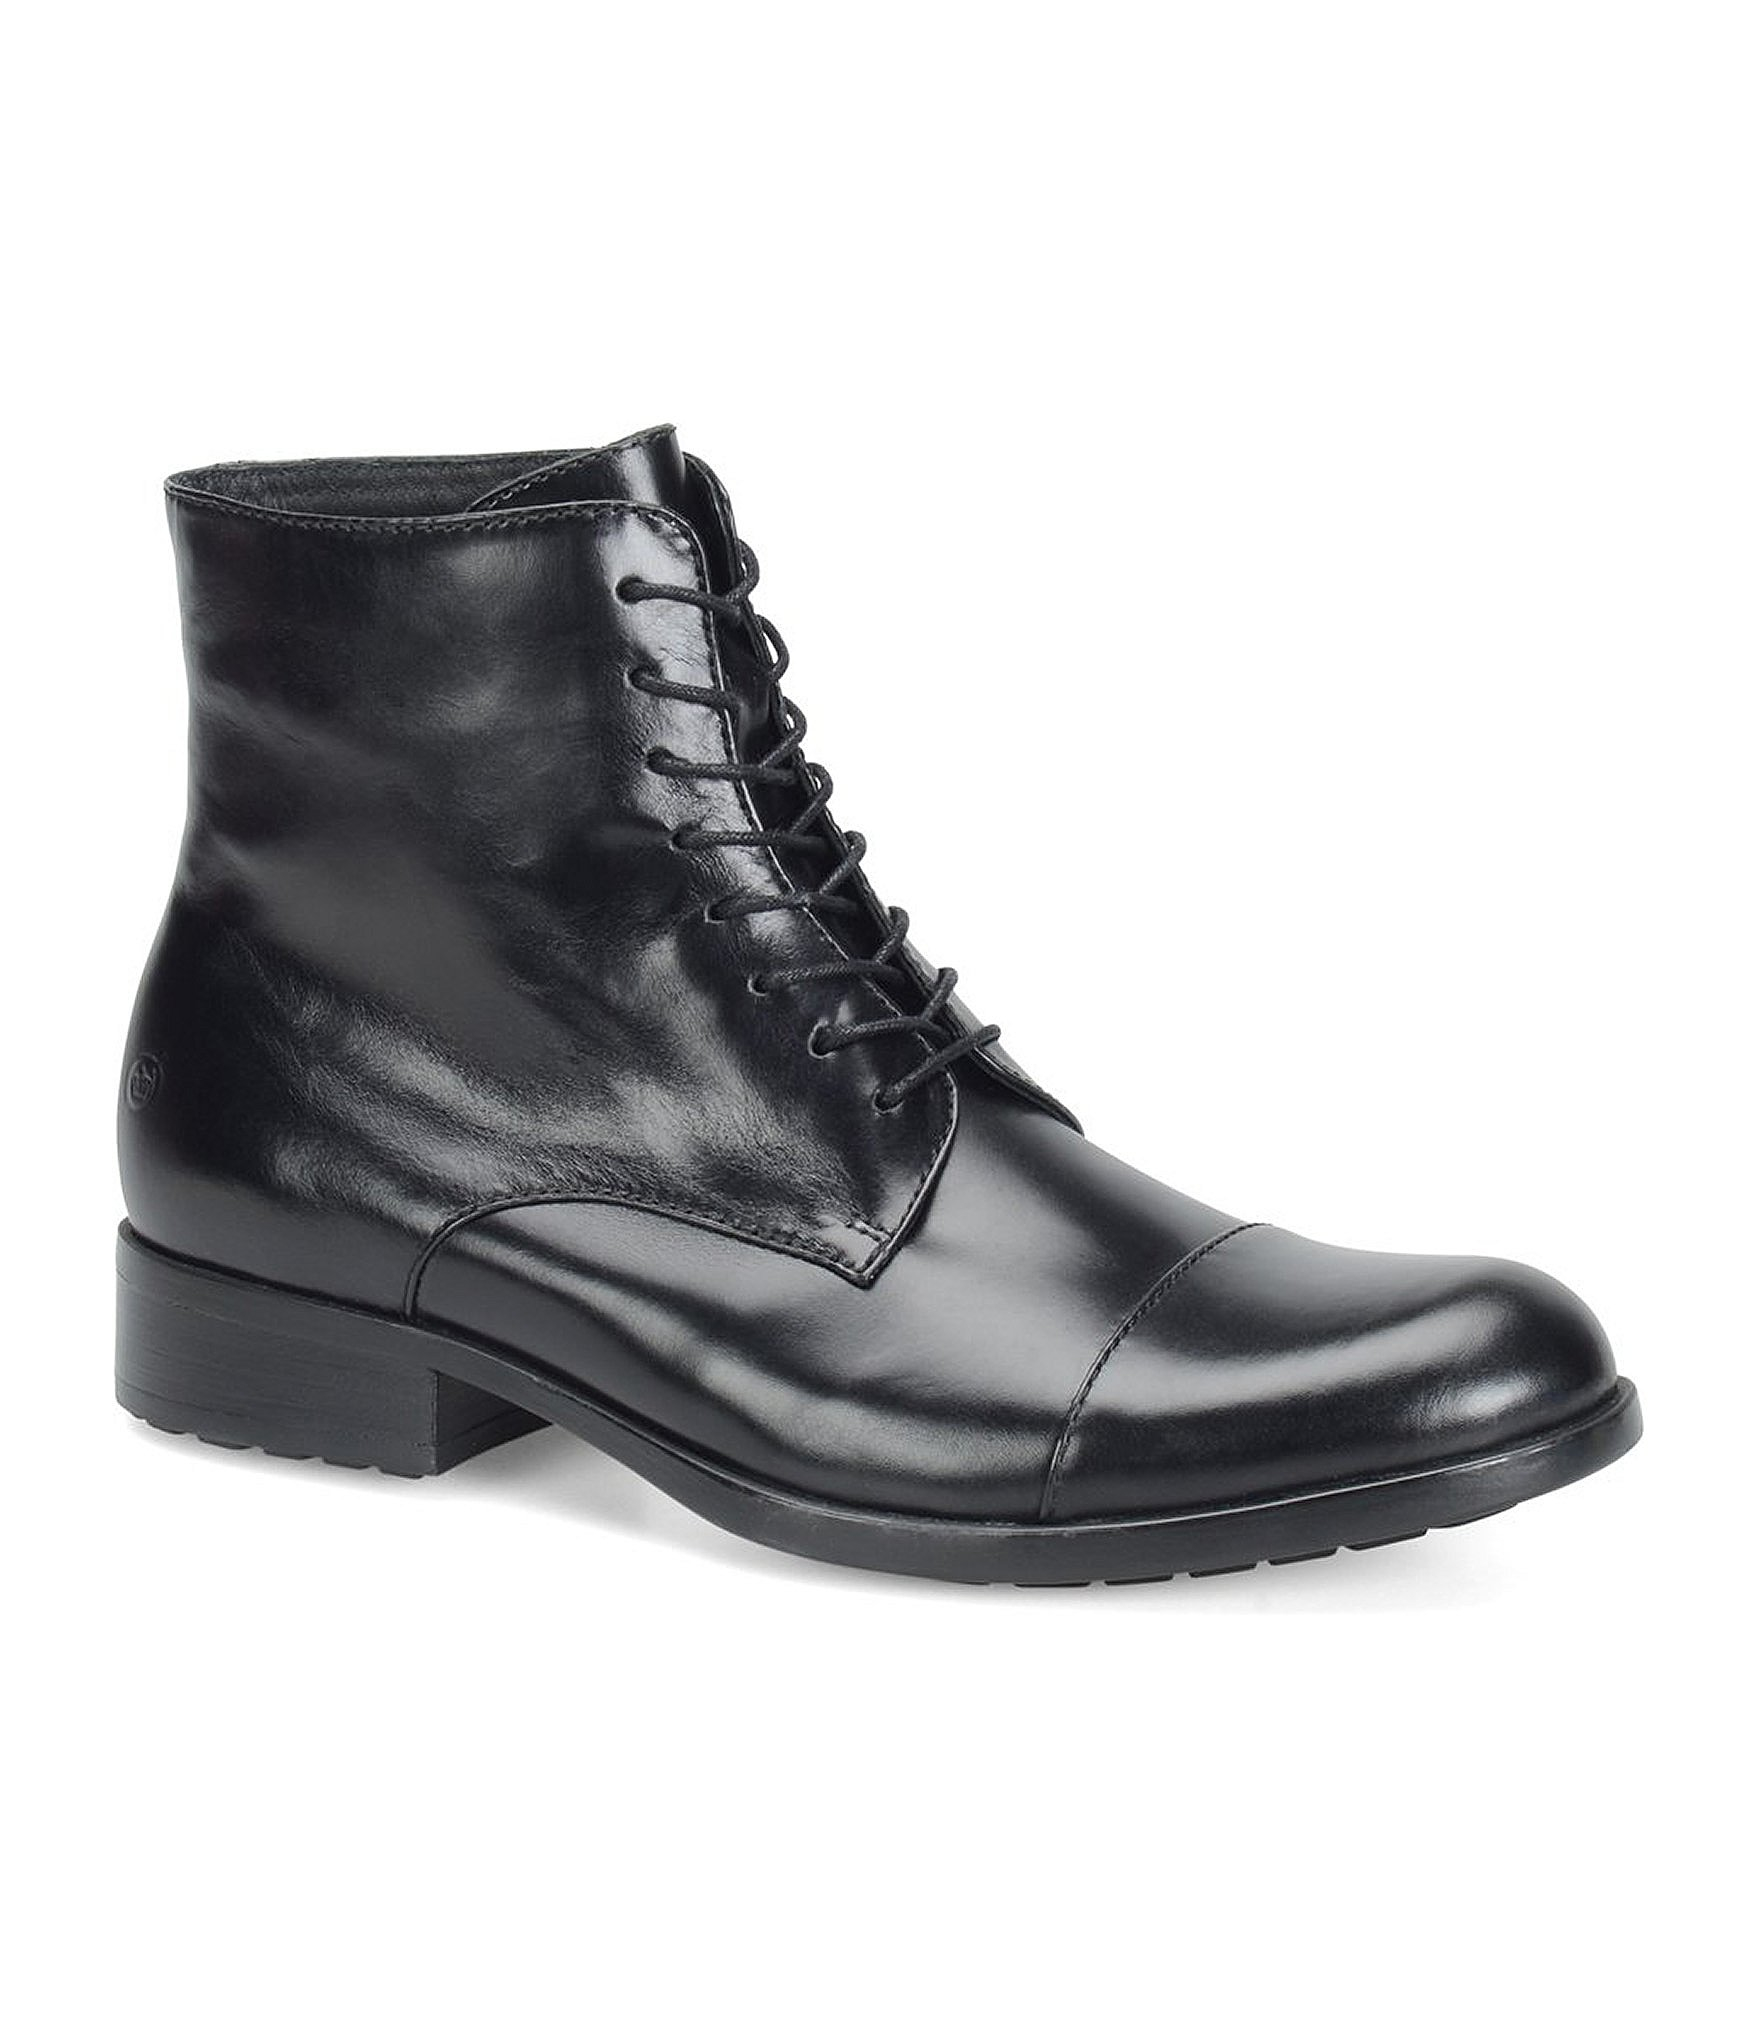 black dress boots